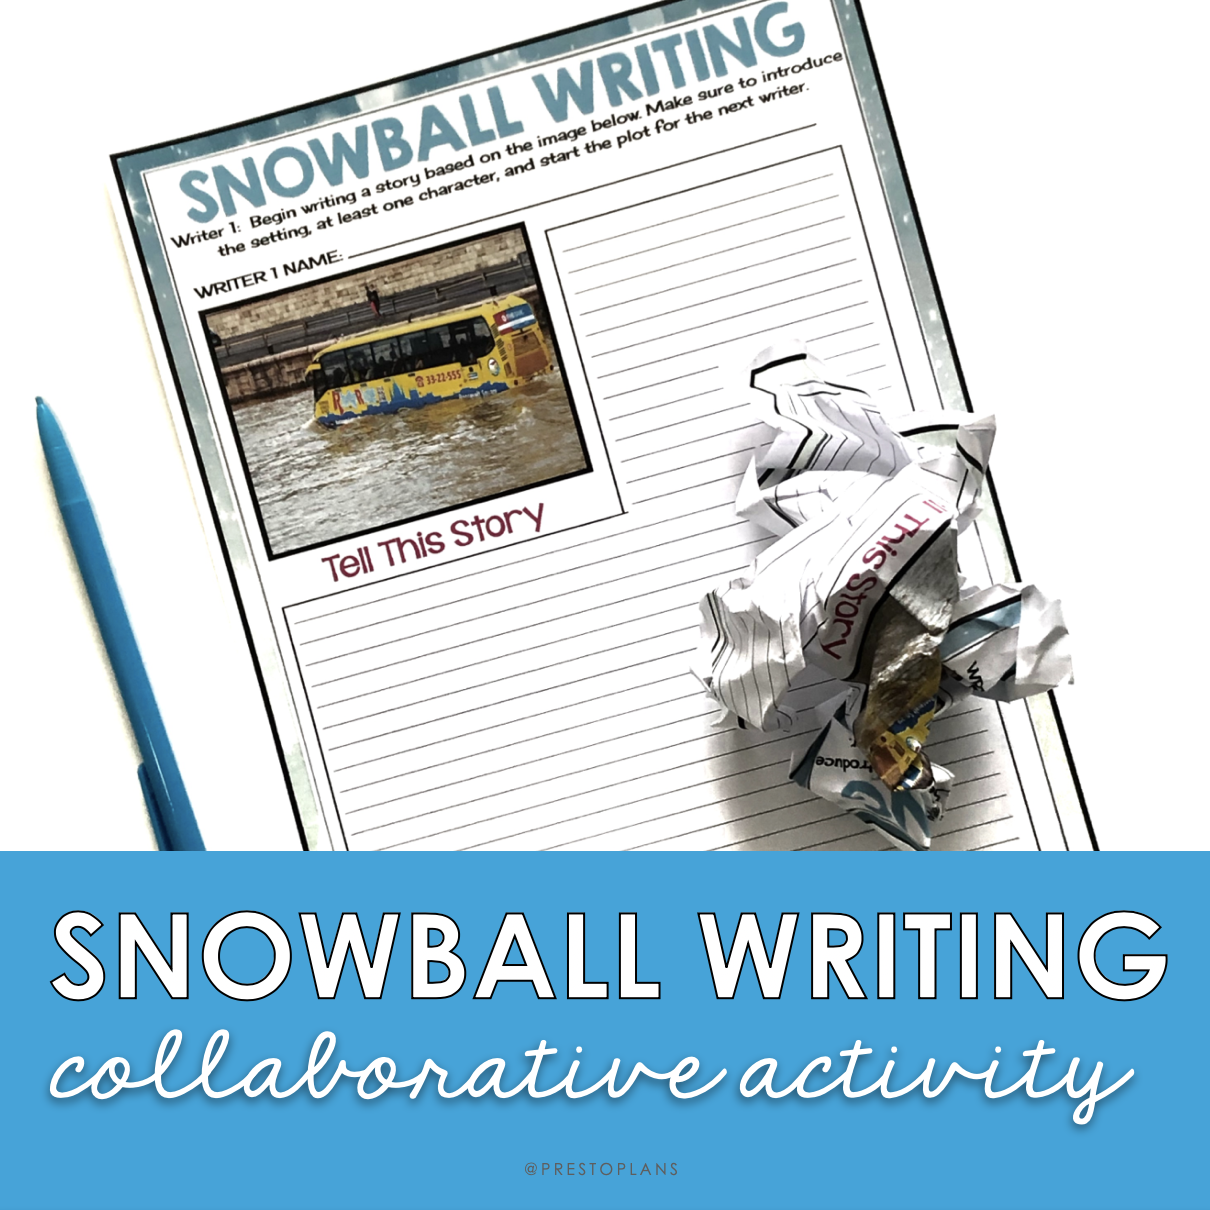 Snowball writing collaborative writing activity